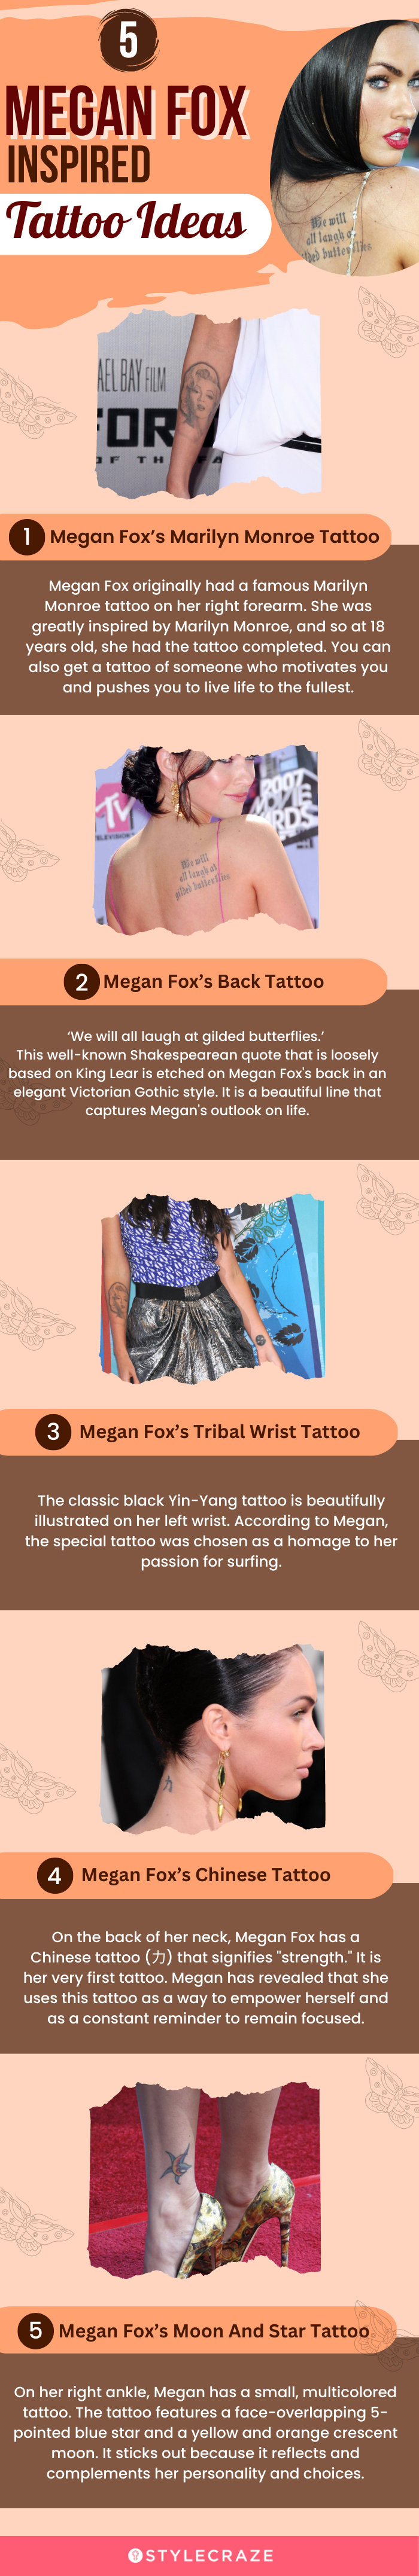 5 megan fox inspired tattoo ideas (infographic)